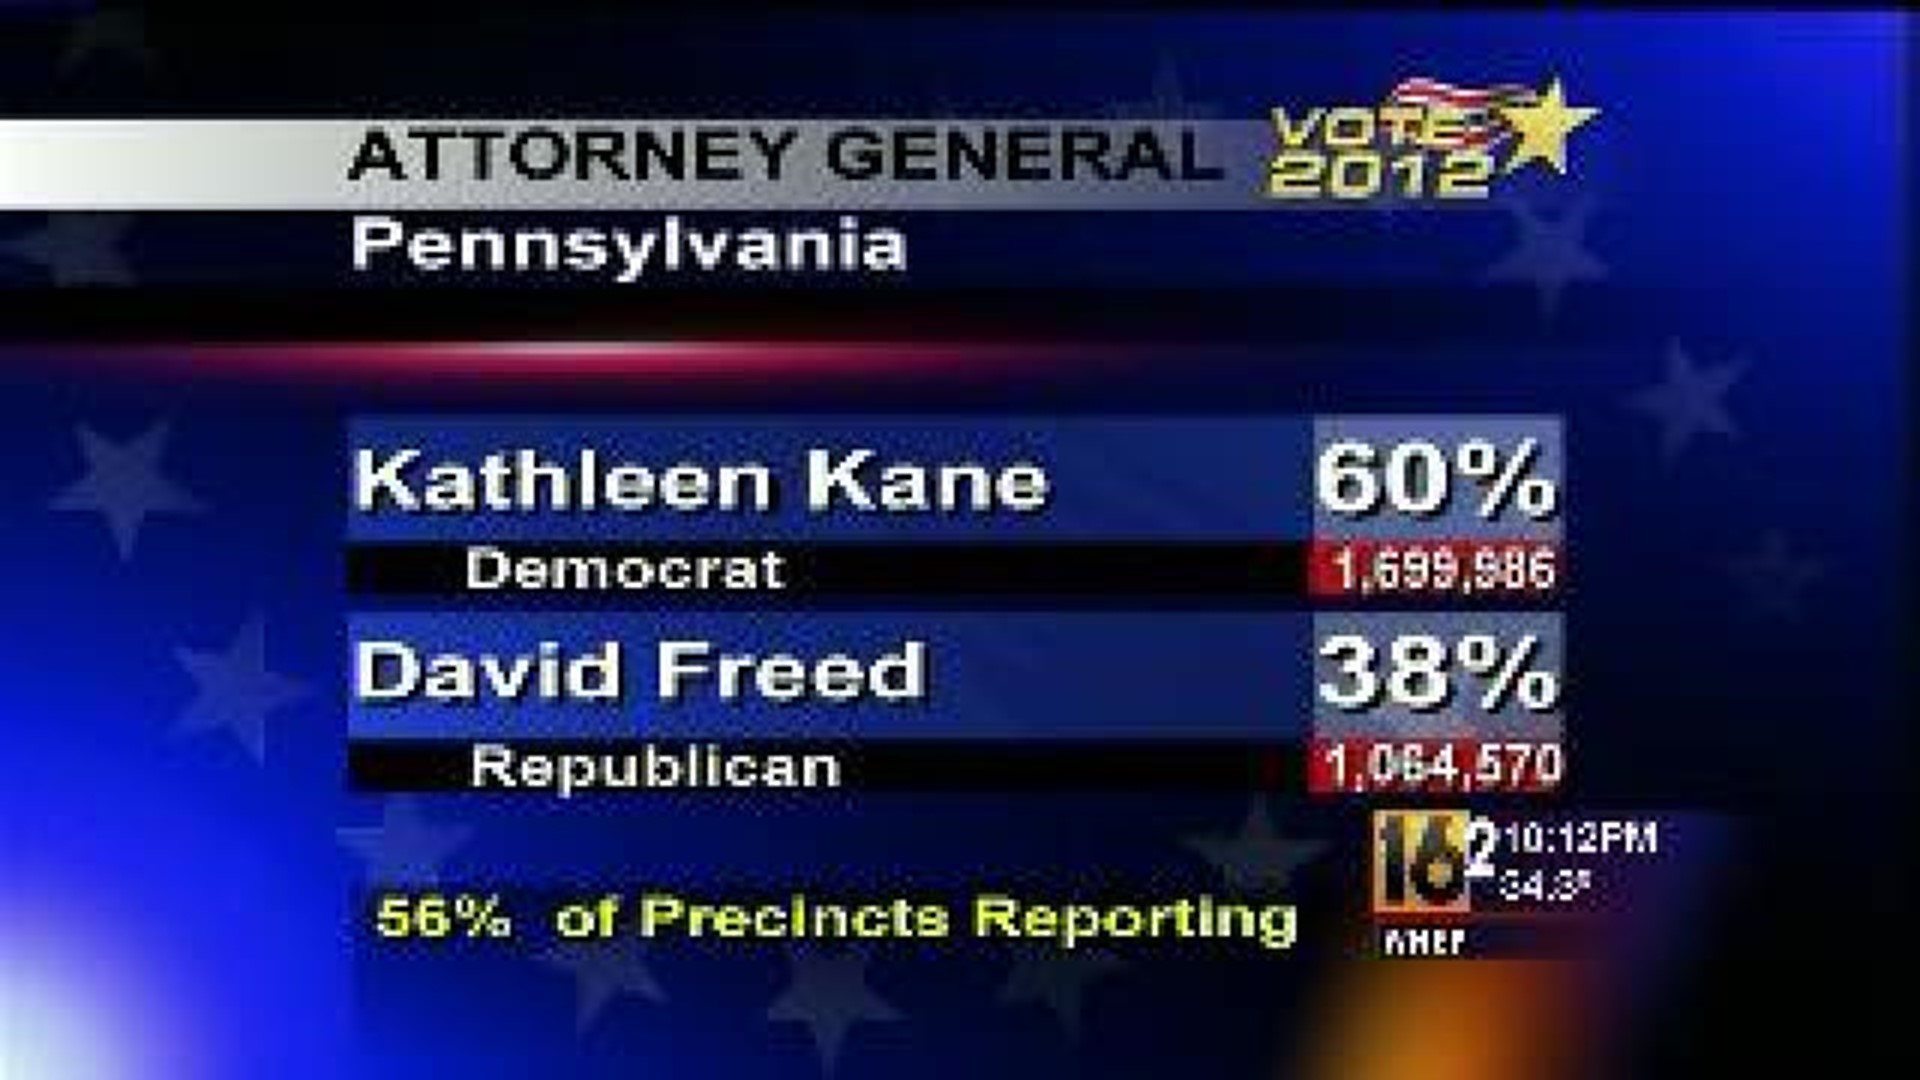 Victory for Kathleen Kane